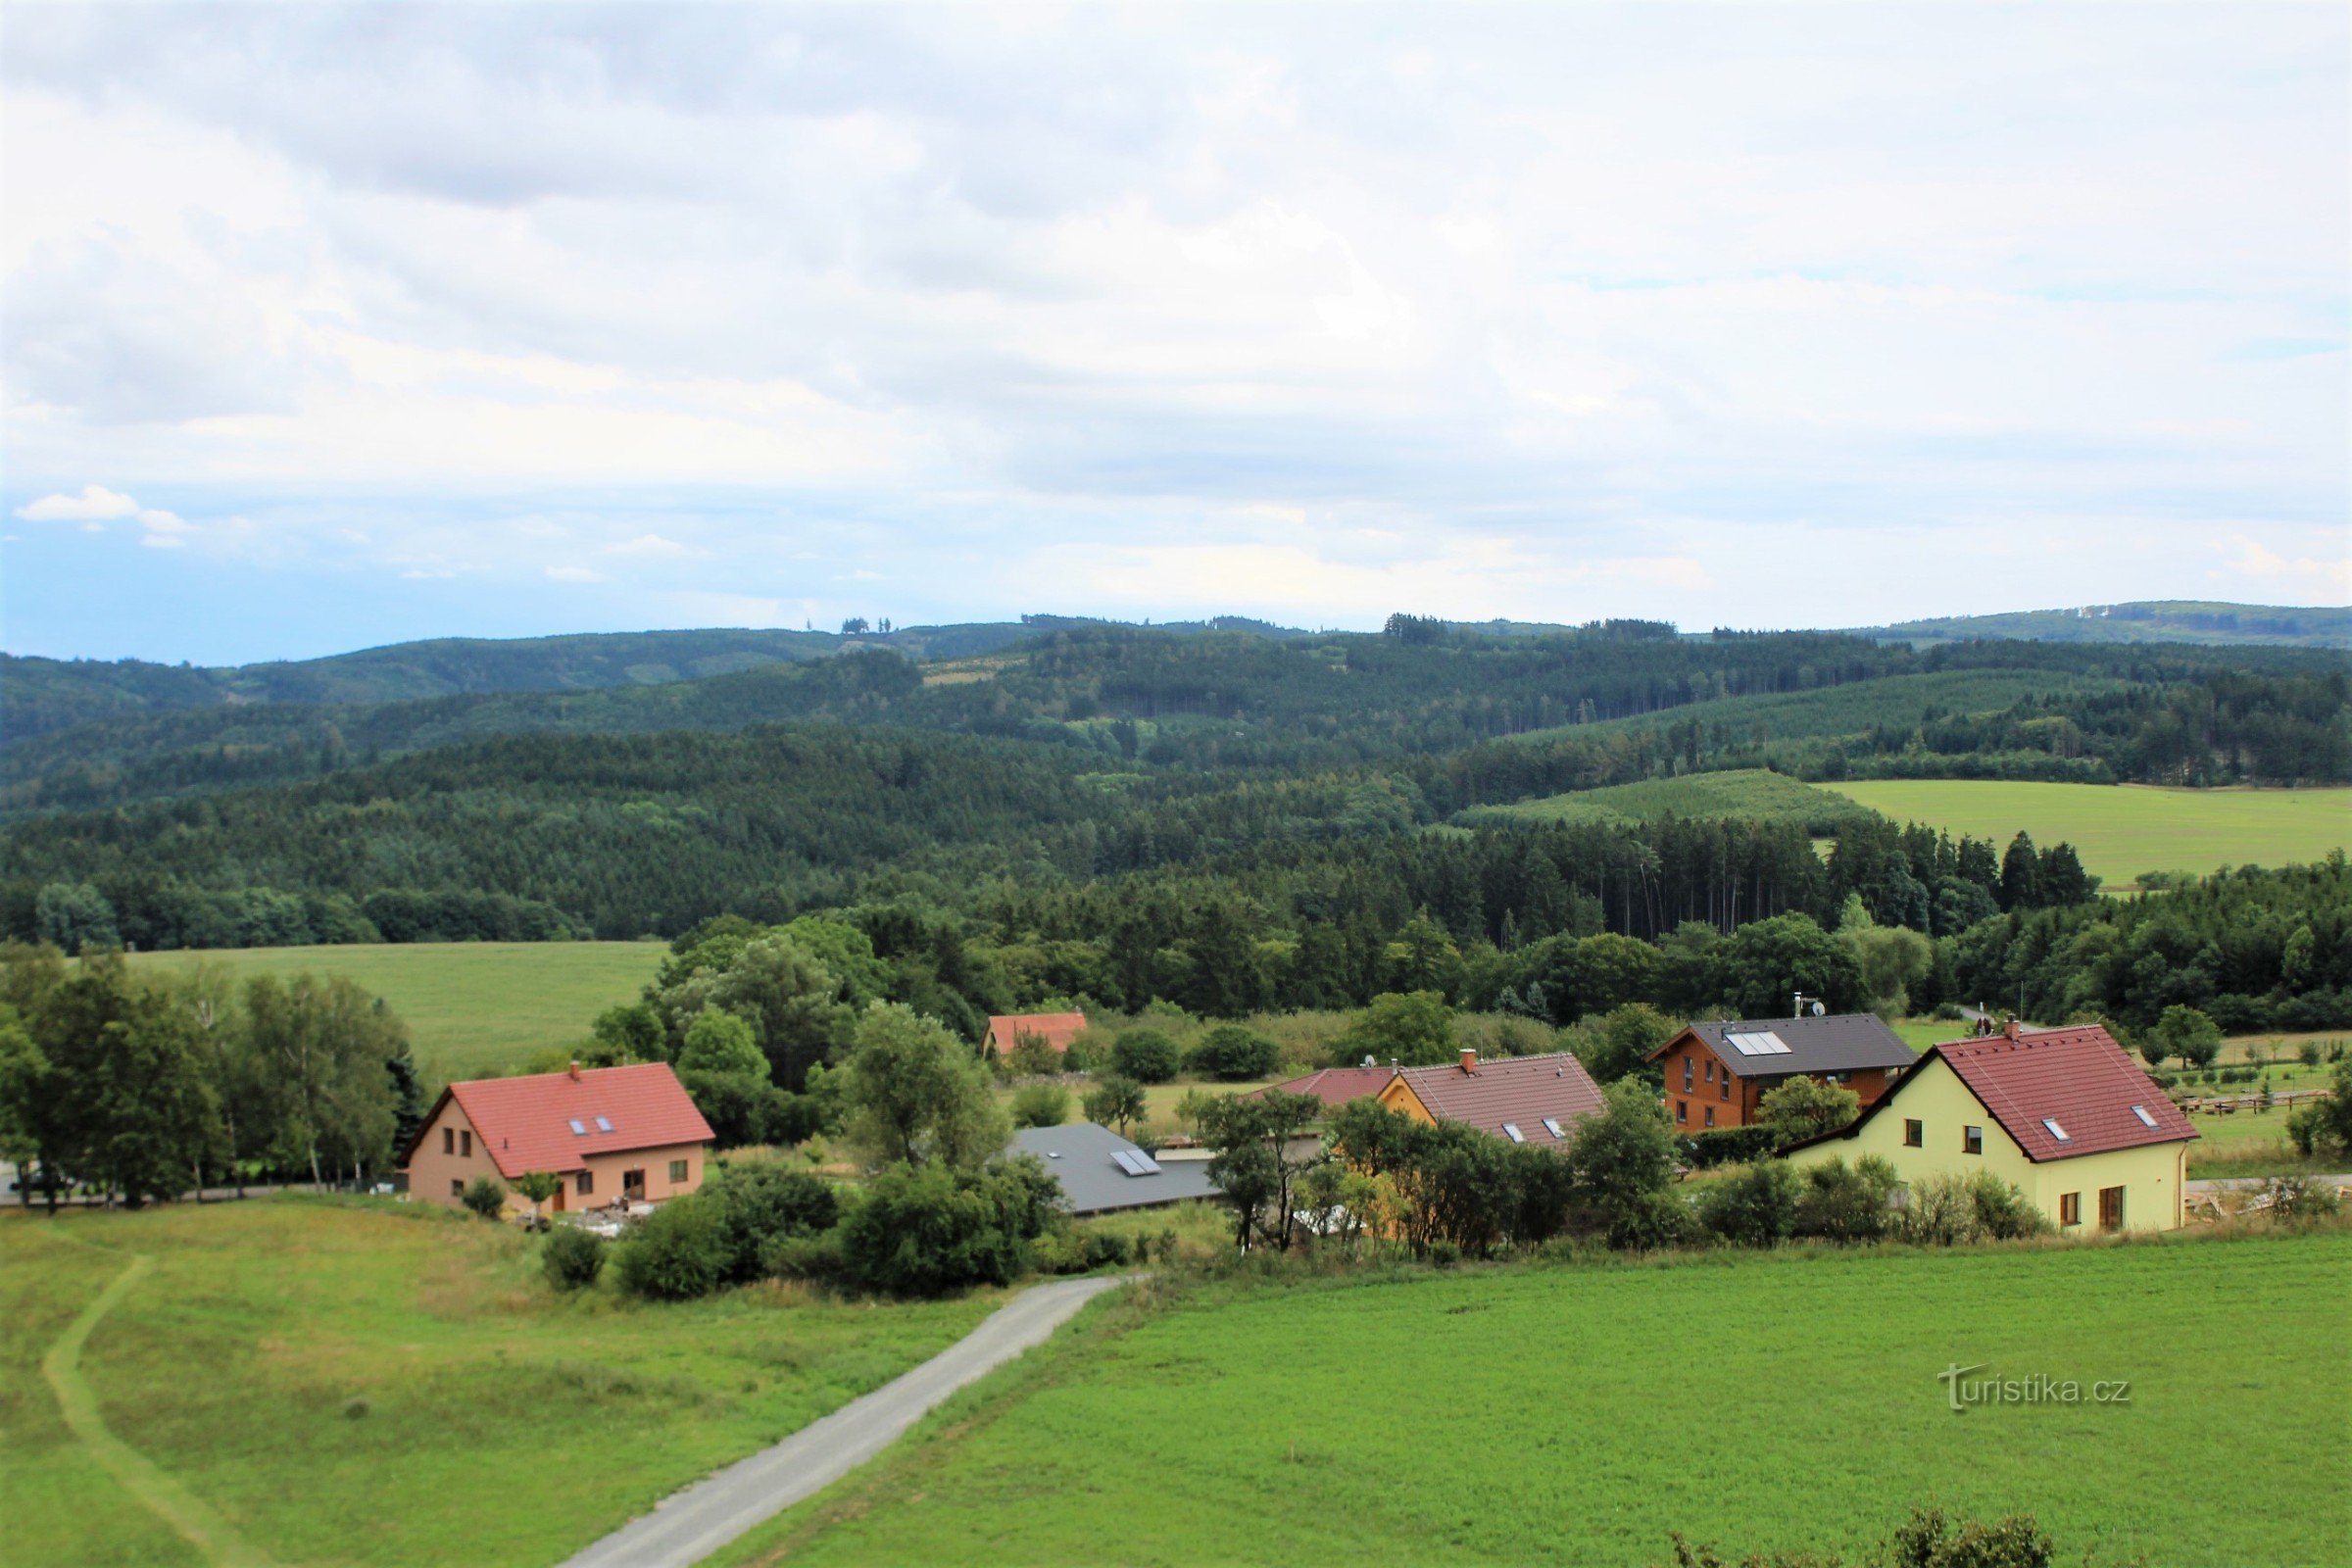 Hořický hřbetに向かって村の上部を見渡す展望塔からの眺め